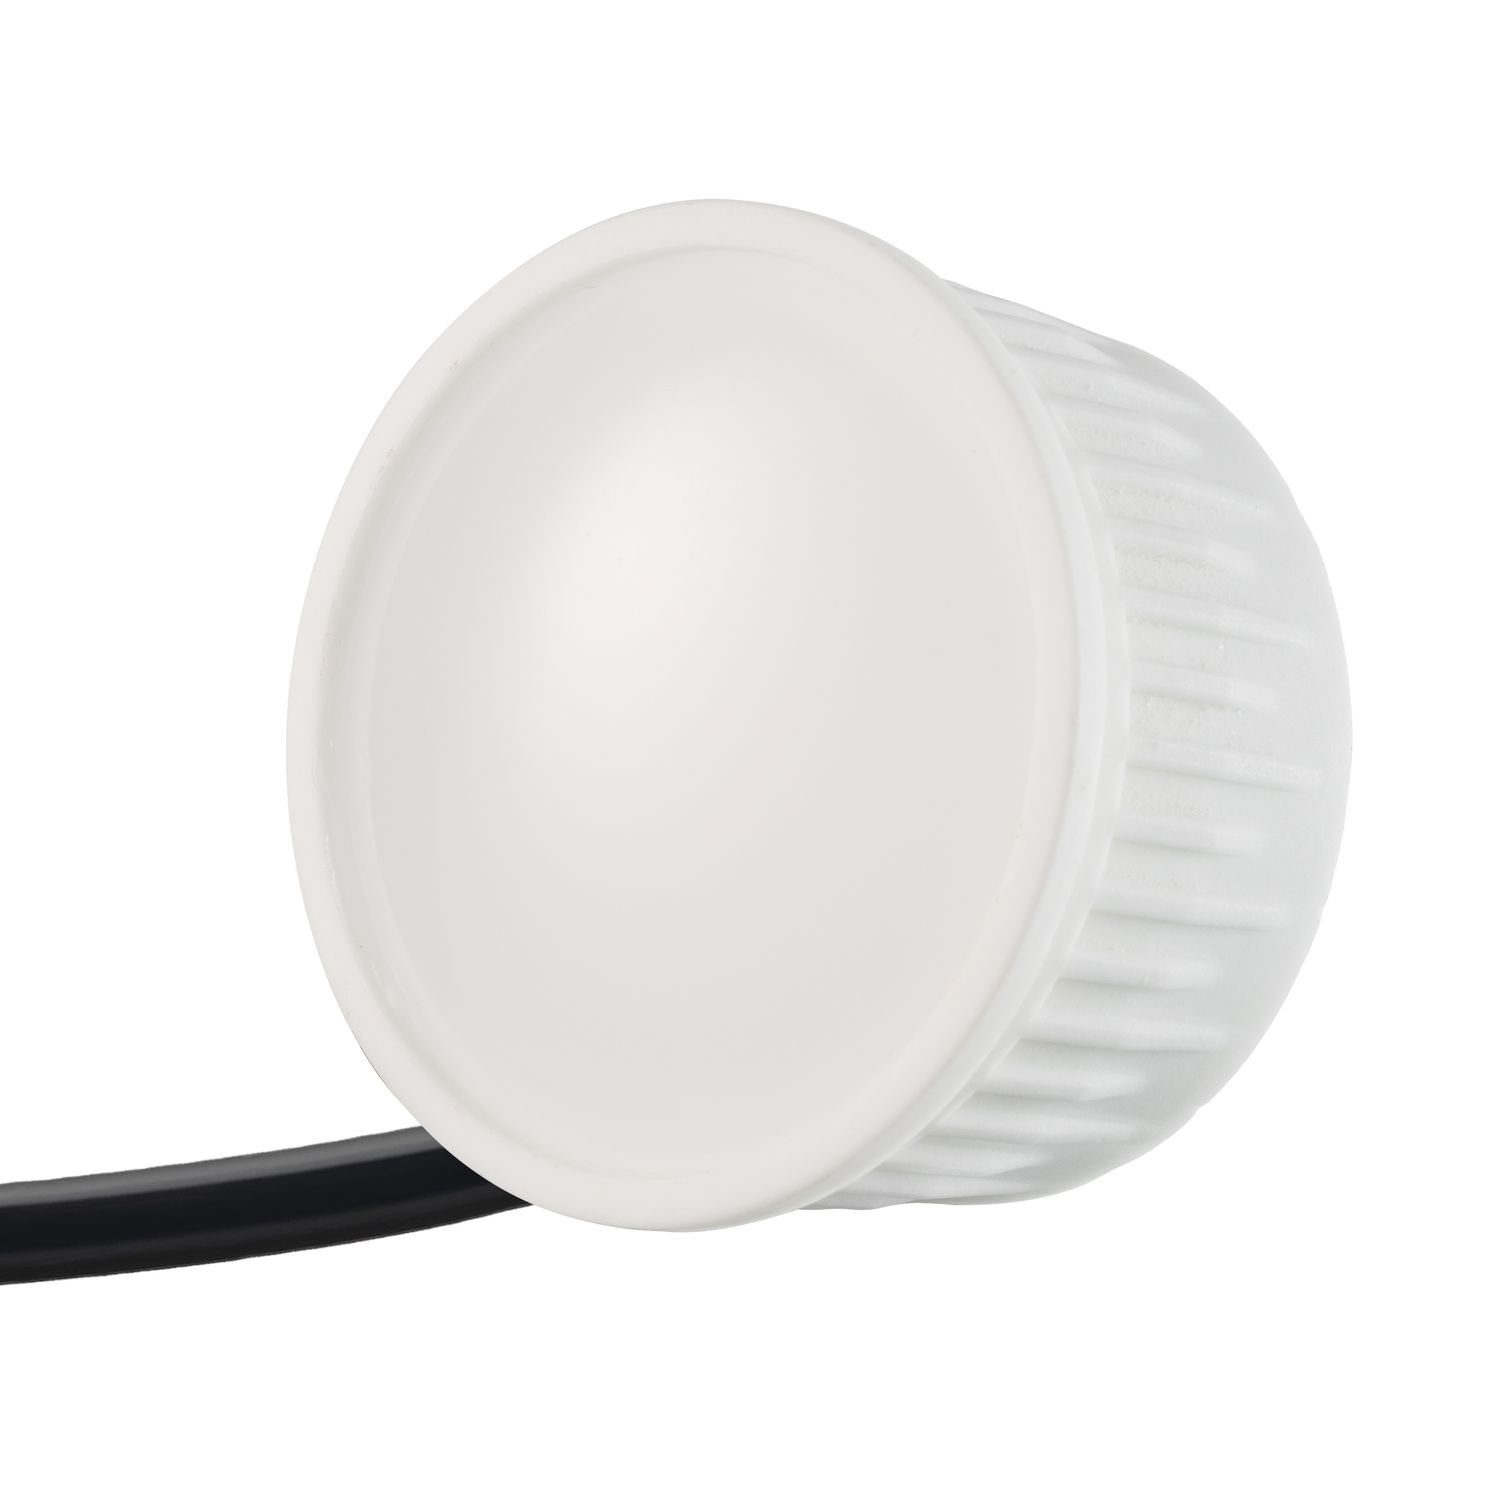 LEDANDO LED Einbaustrahler 10er LED Set vo 5W extra Einbaustrahler weiß flach Leuchtmittel in mit